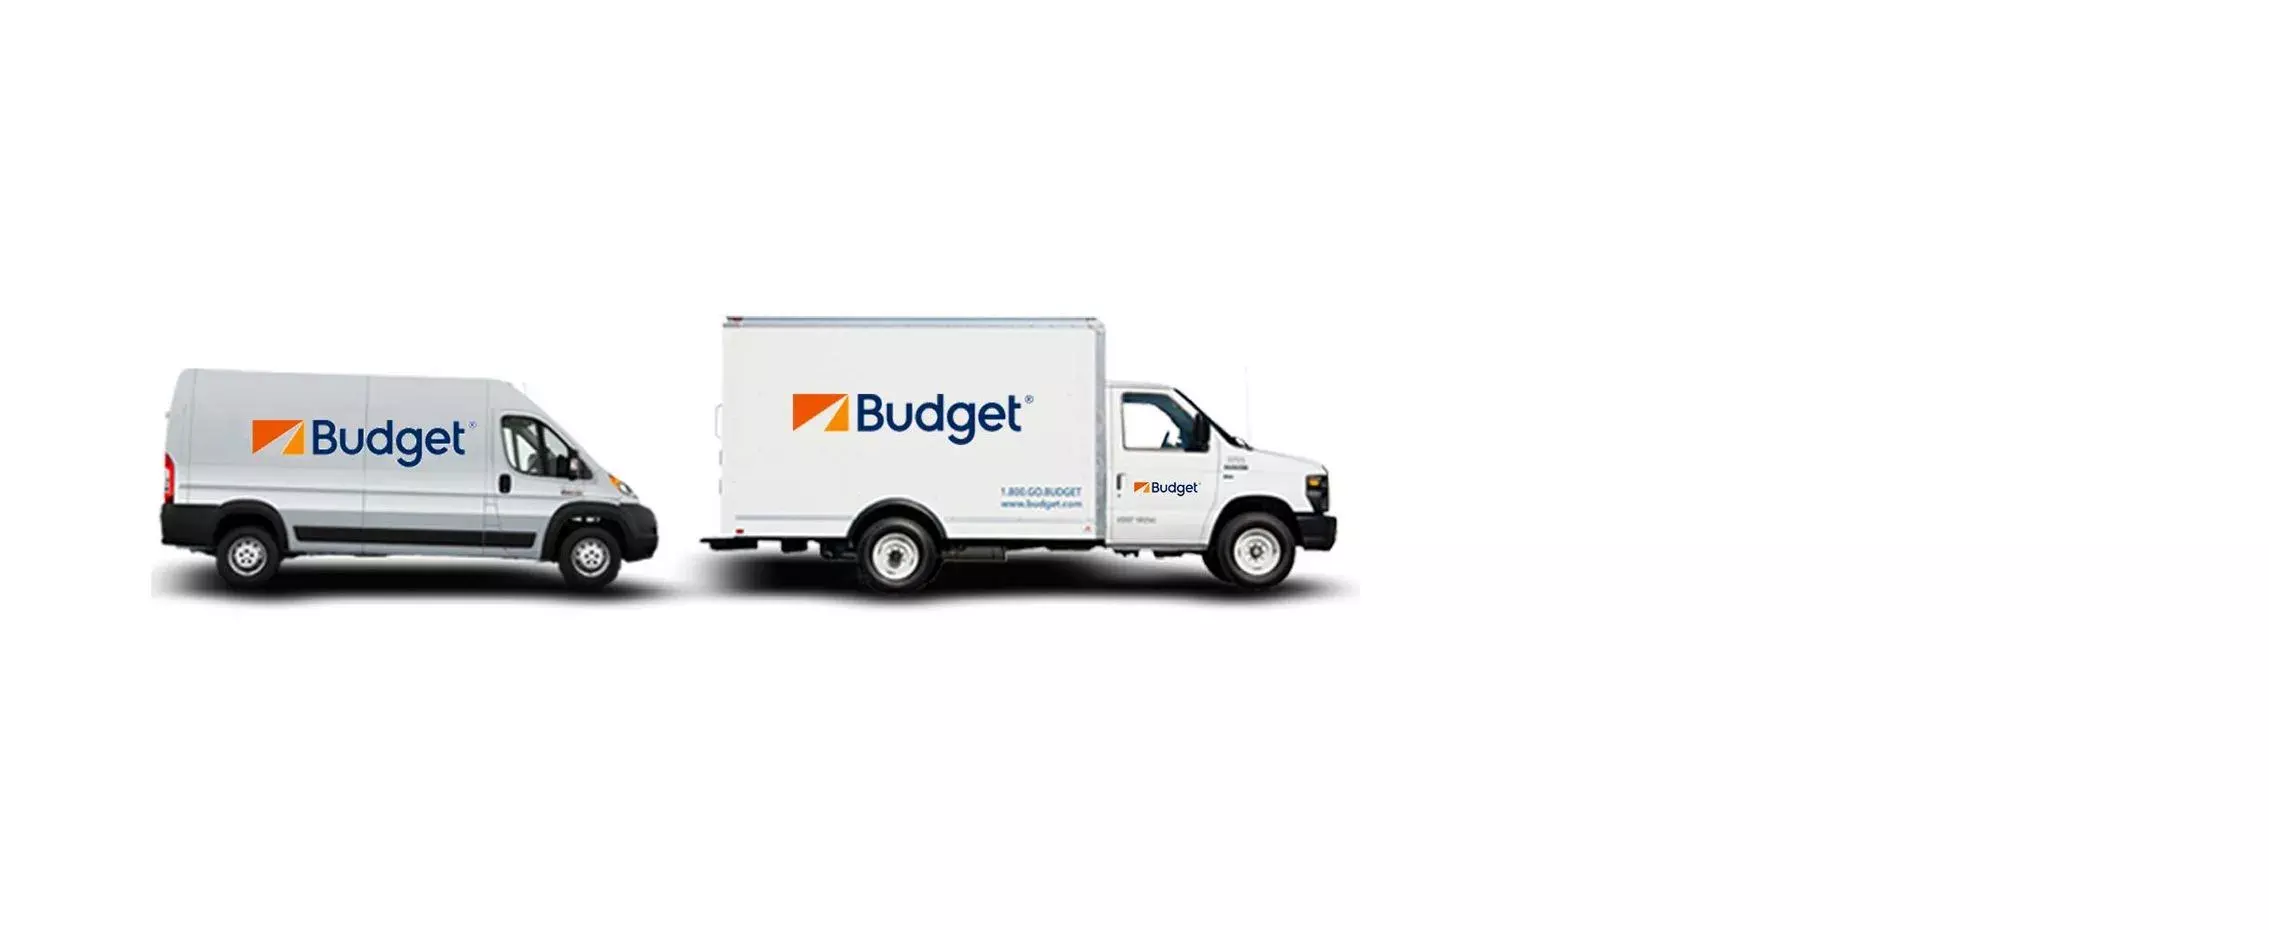 moving cargo van rental